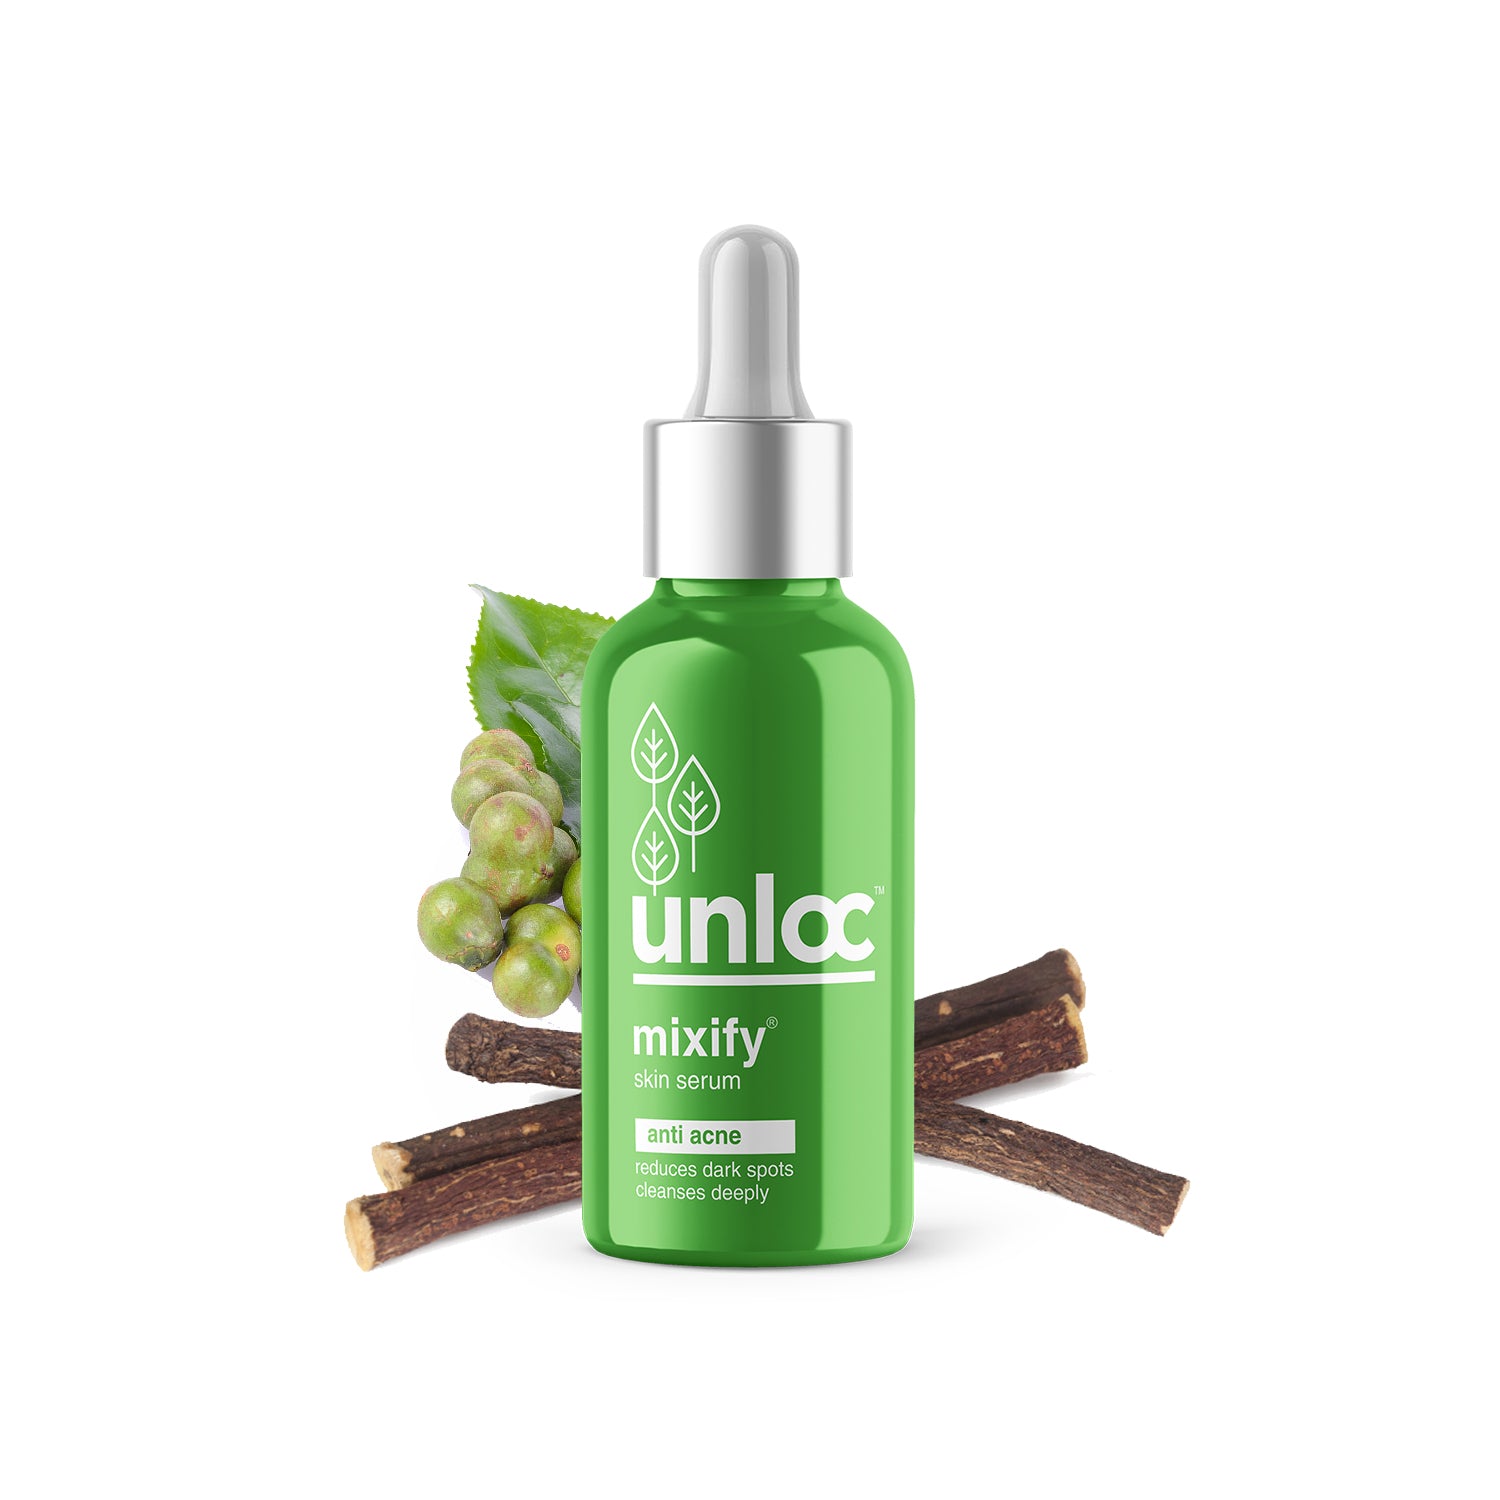 Unloc Mixify Anti Acne Face Serum - 30ml